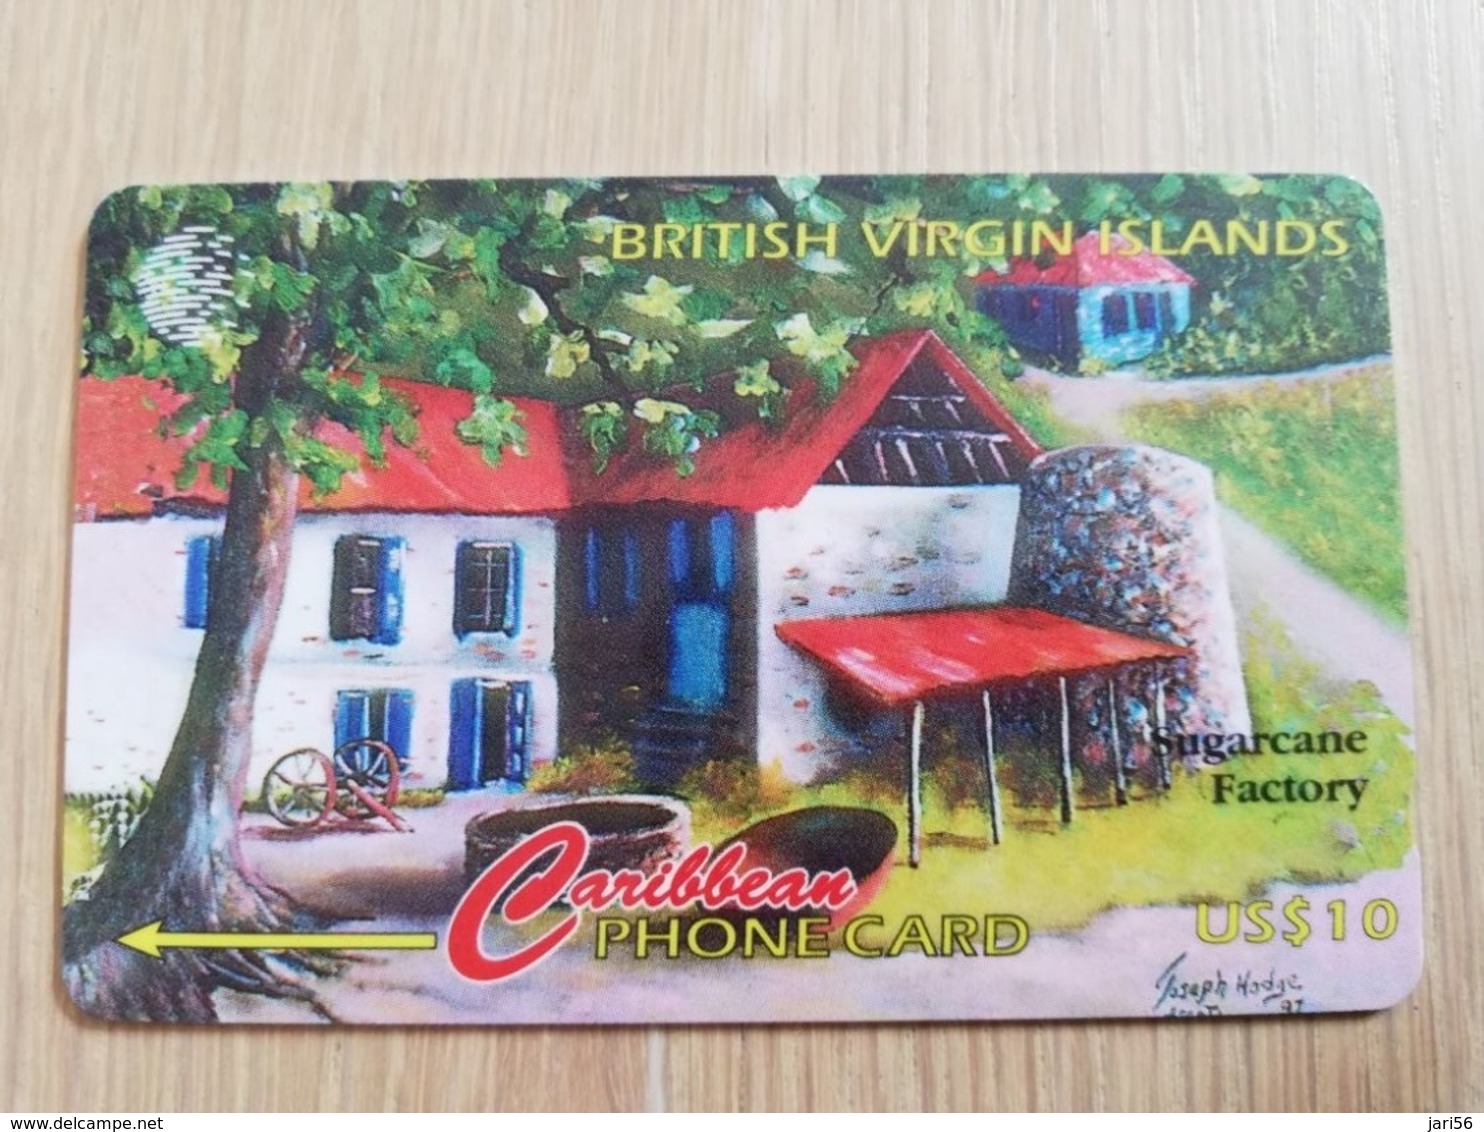 BRITSCH VIRGIN ISLANDS  US$ 10  BVI-193H   SUGARCANE FACTORY   193CBVH     Fine Used Card   ** 2690** - Vierges (îles)